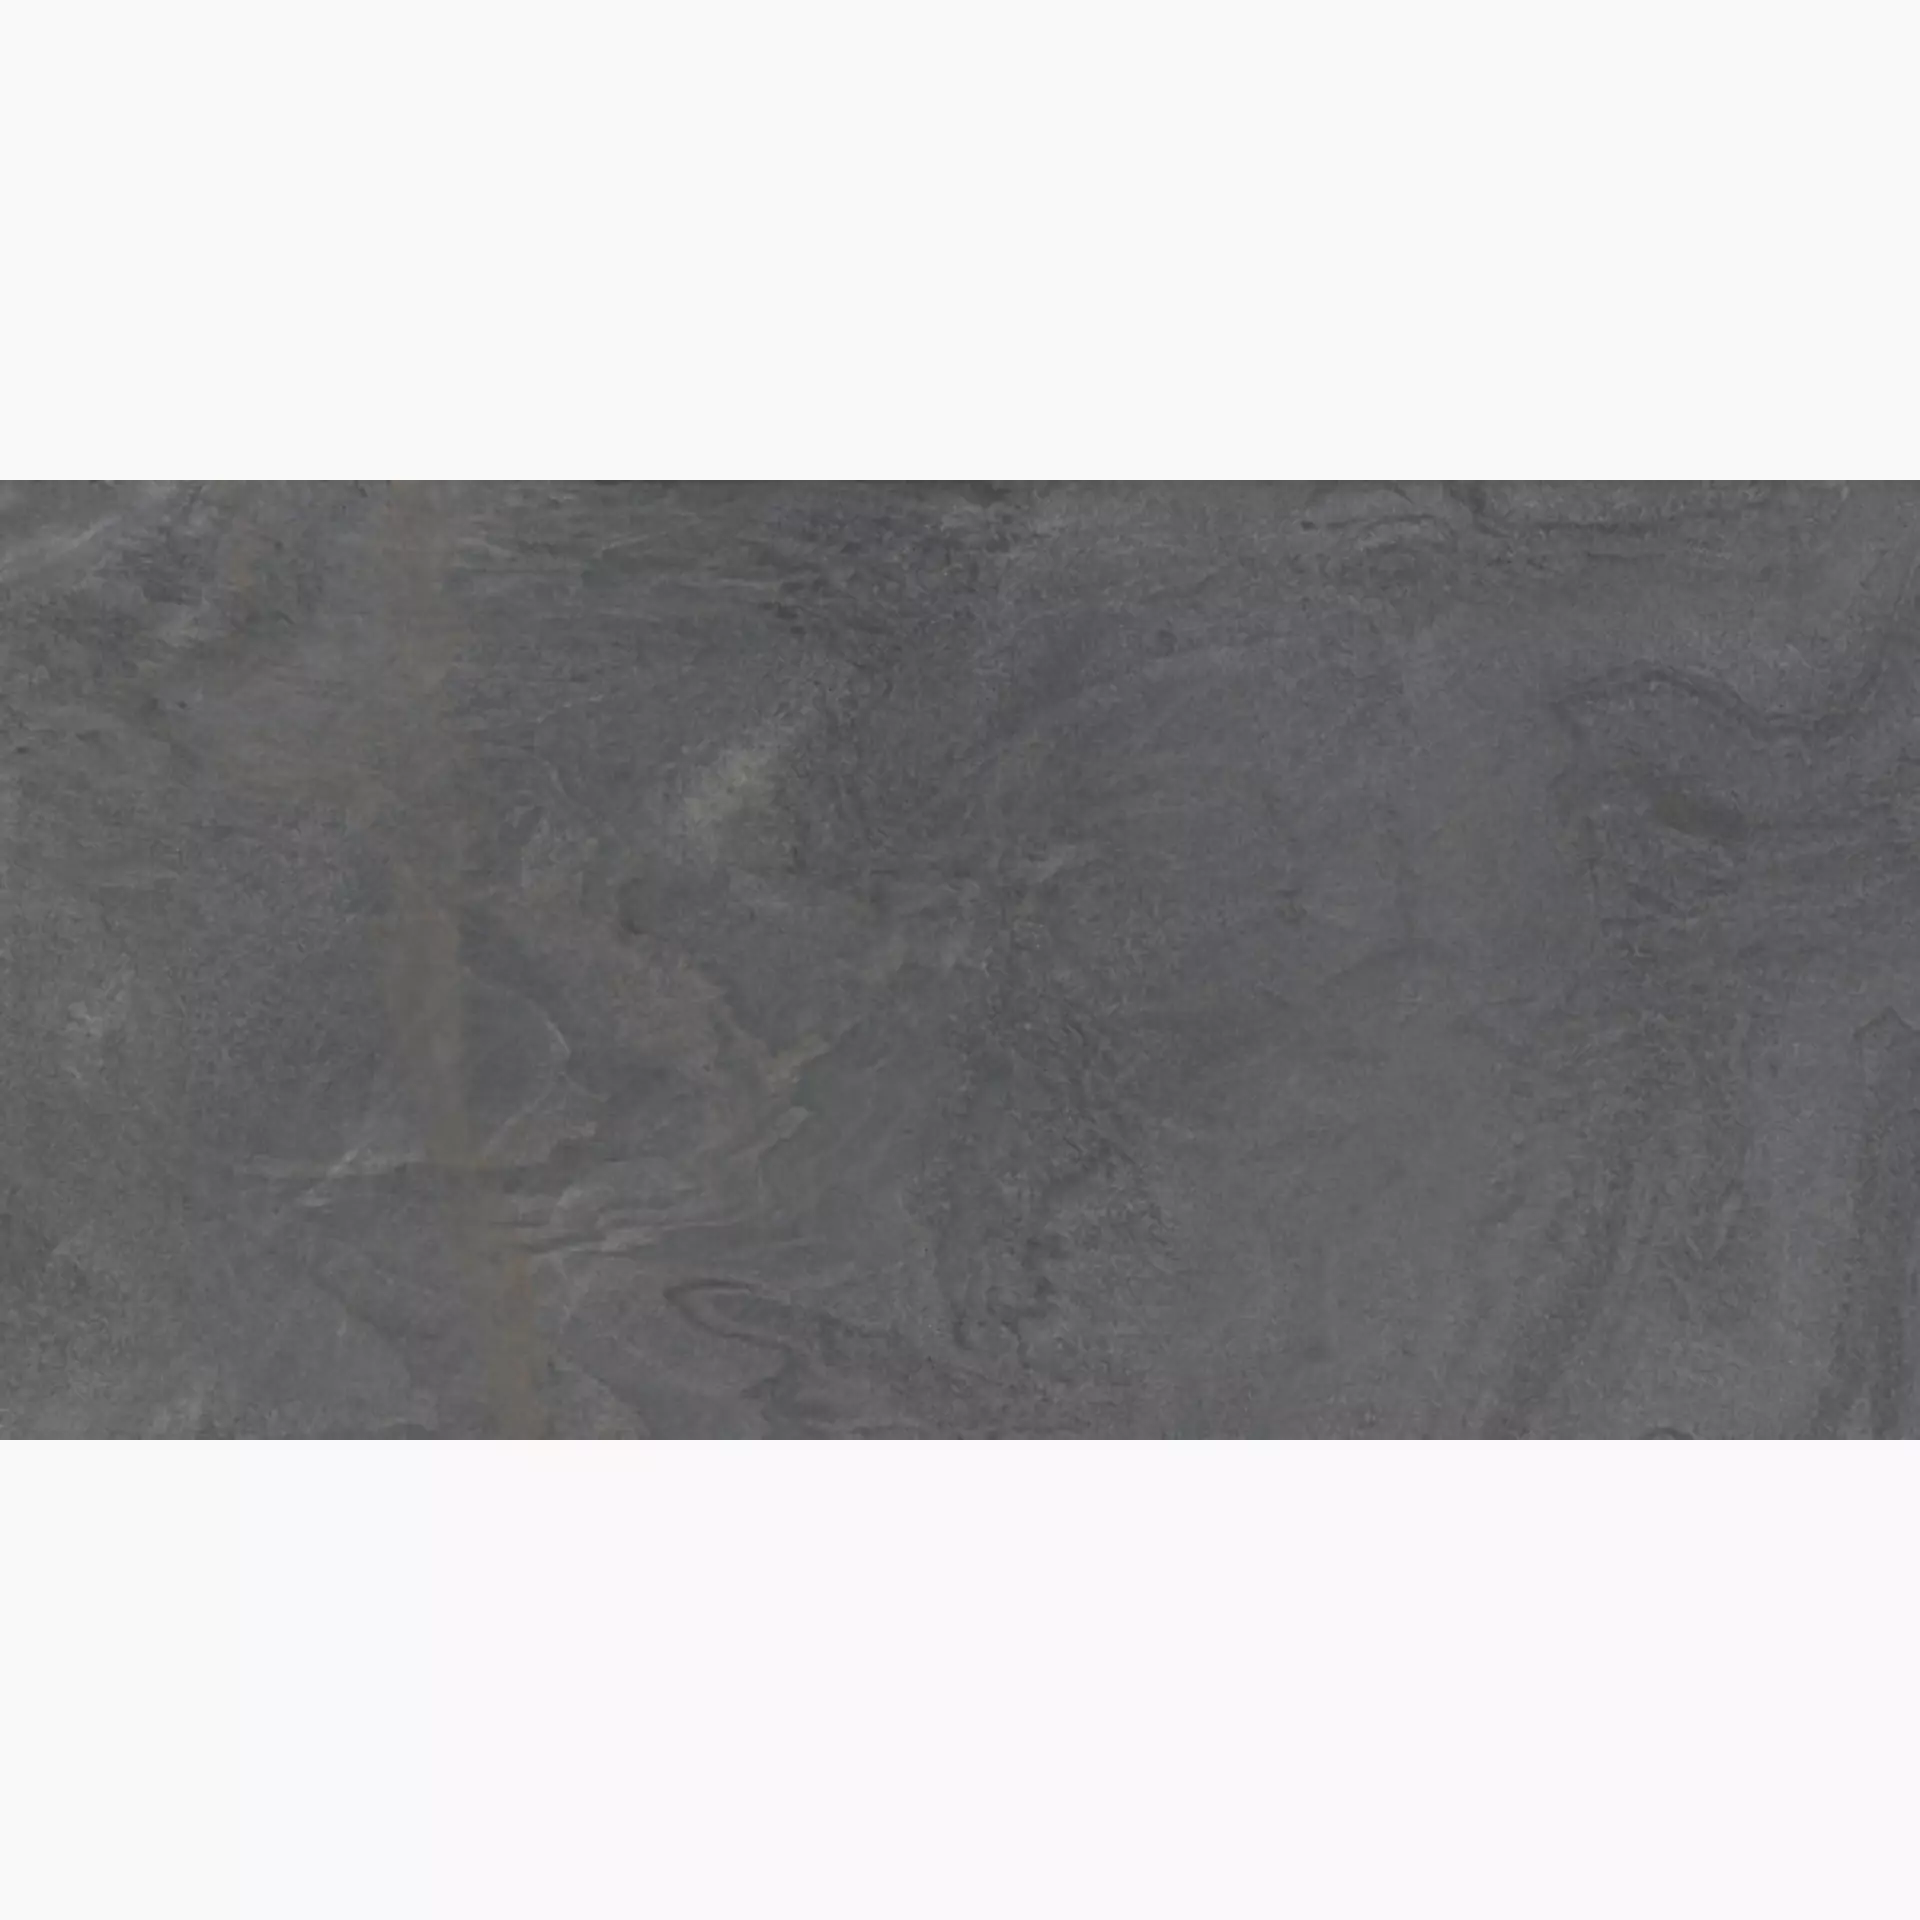 Diesel Liquid Stone Black Antislip 863740 30x60cm rectified 9mm